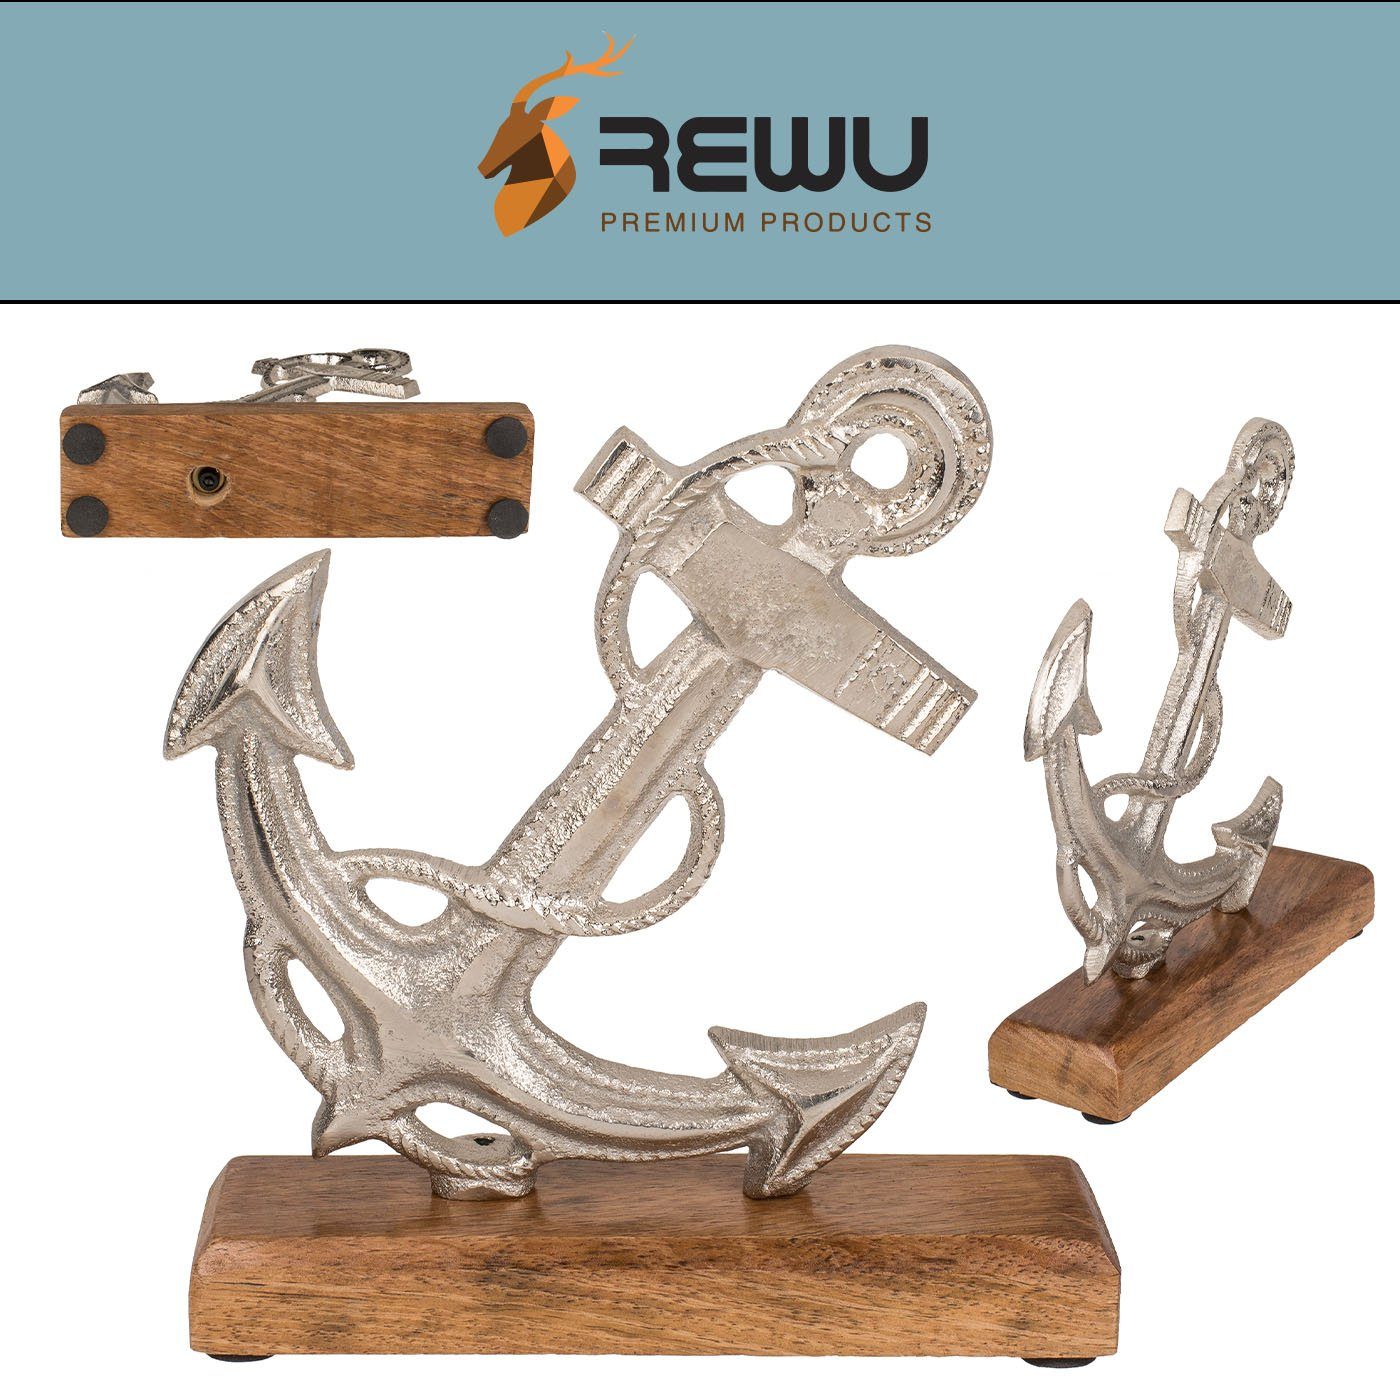 Metall auf Metall Silberfarbener ReWu Holz Dekoobjekt Anker Schriftzug Mit Seil Fuß